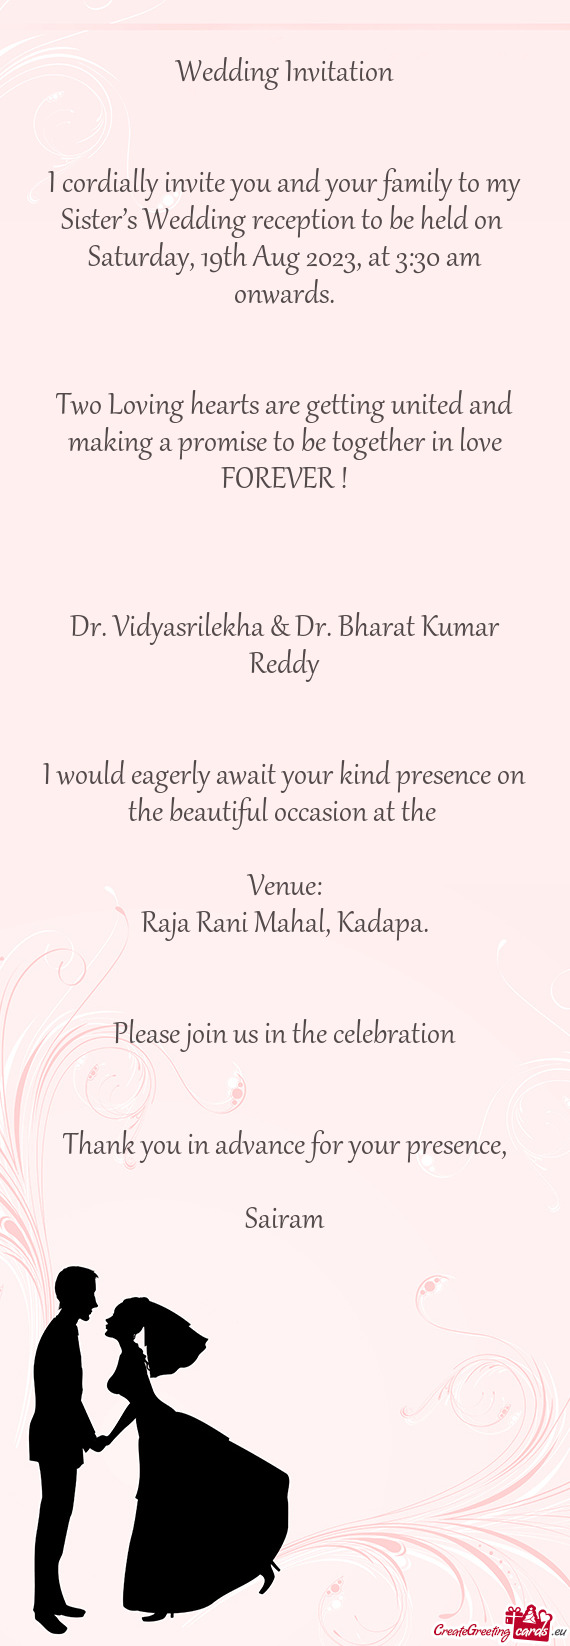 Dr. Vidyasrilekha & Dr. Bharat Kumar Reddy